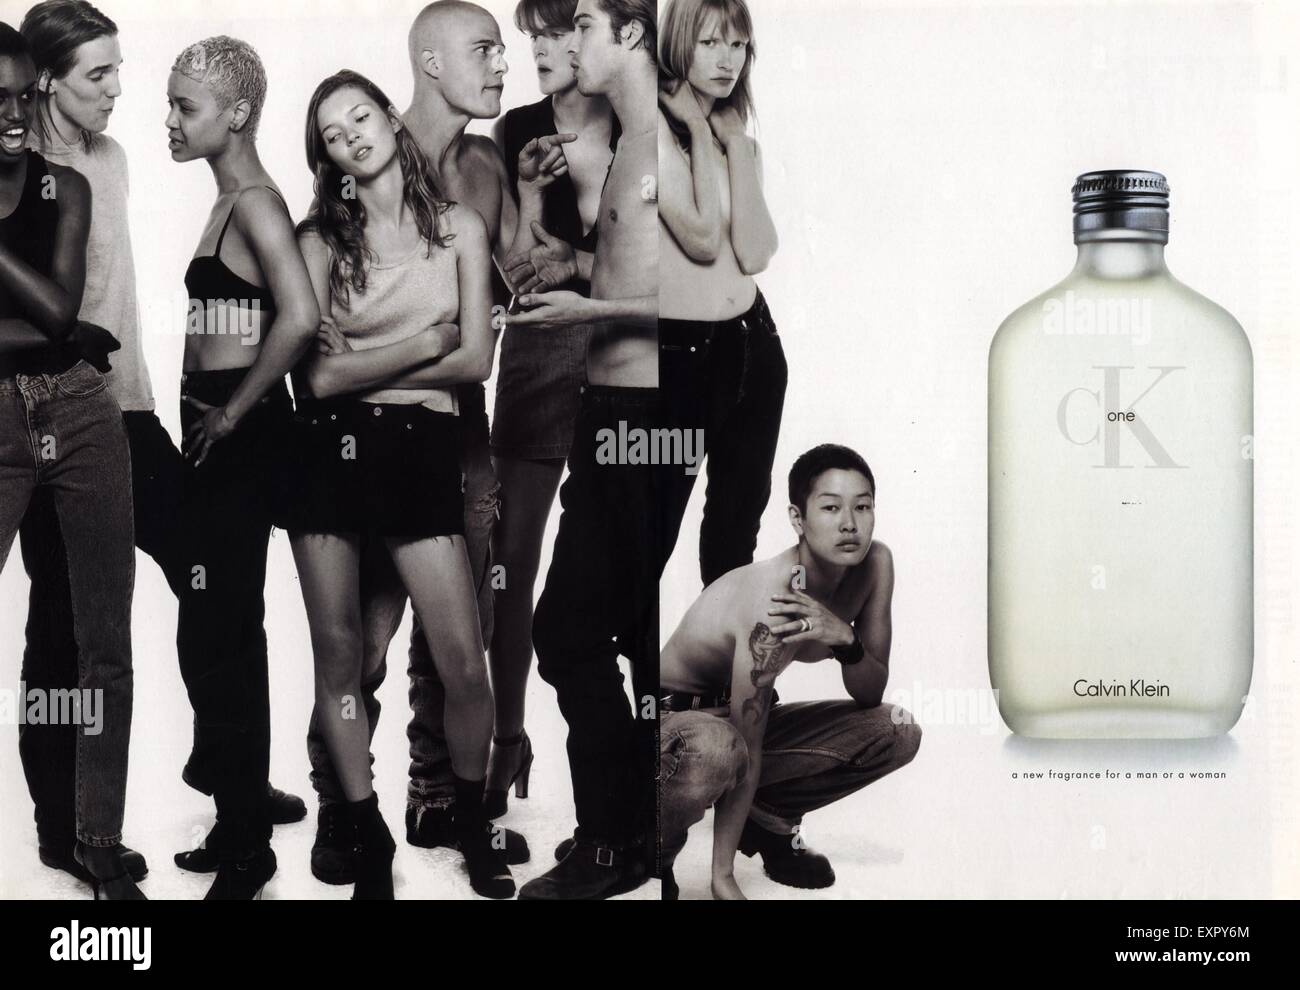 1990s UK CK One/ CK1 by Calvin Klein Magazine Advert Stock Photo - Alamy